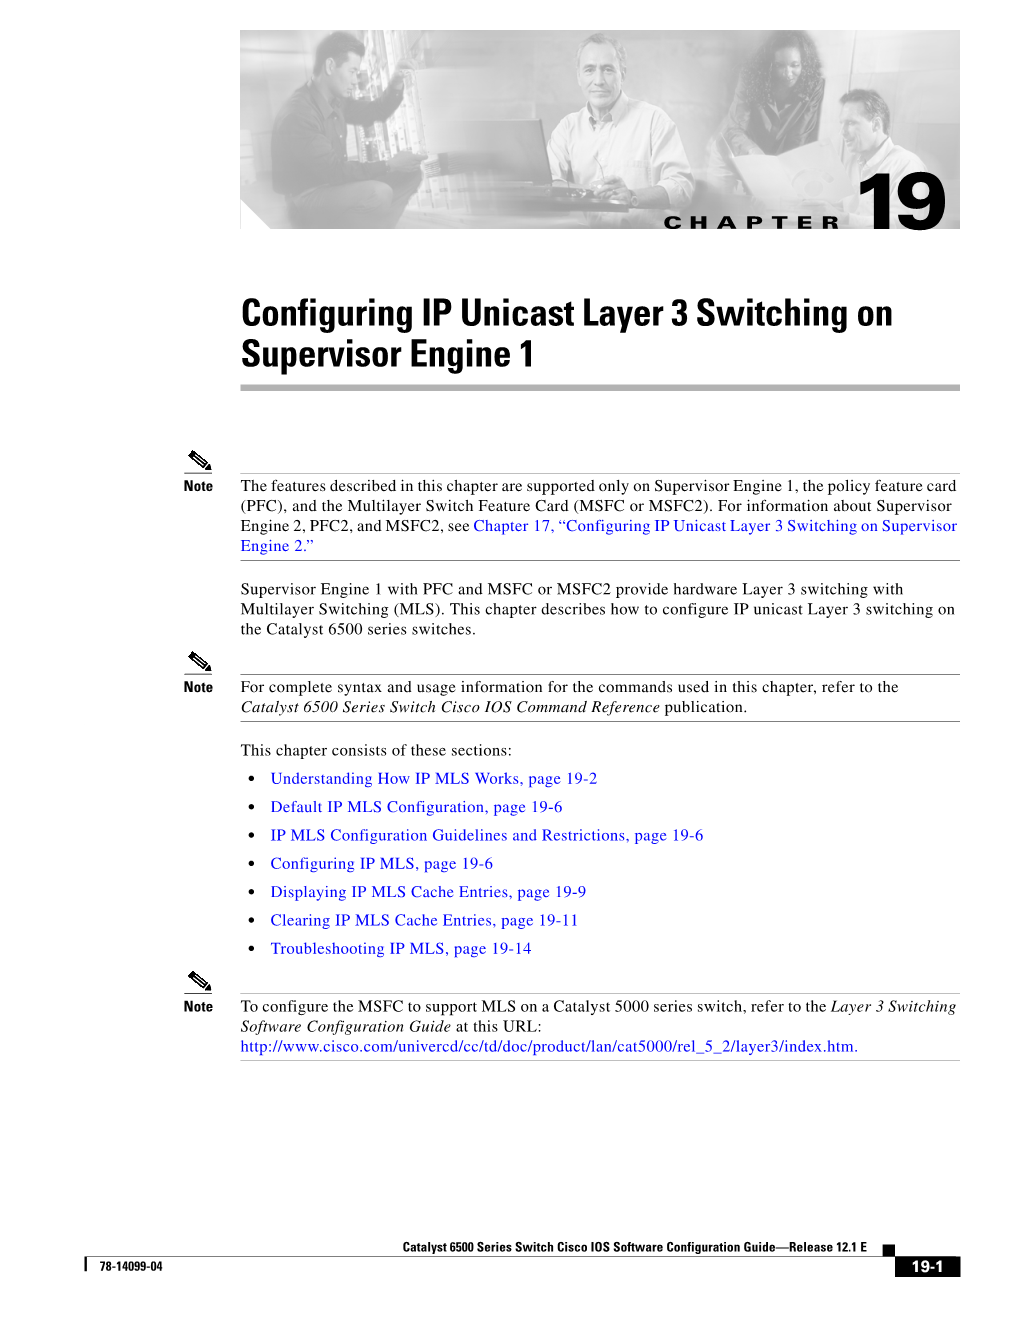 Configuring IP Unicast Layer 3 Switching on Supervisor Engine 1